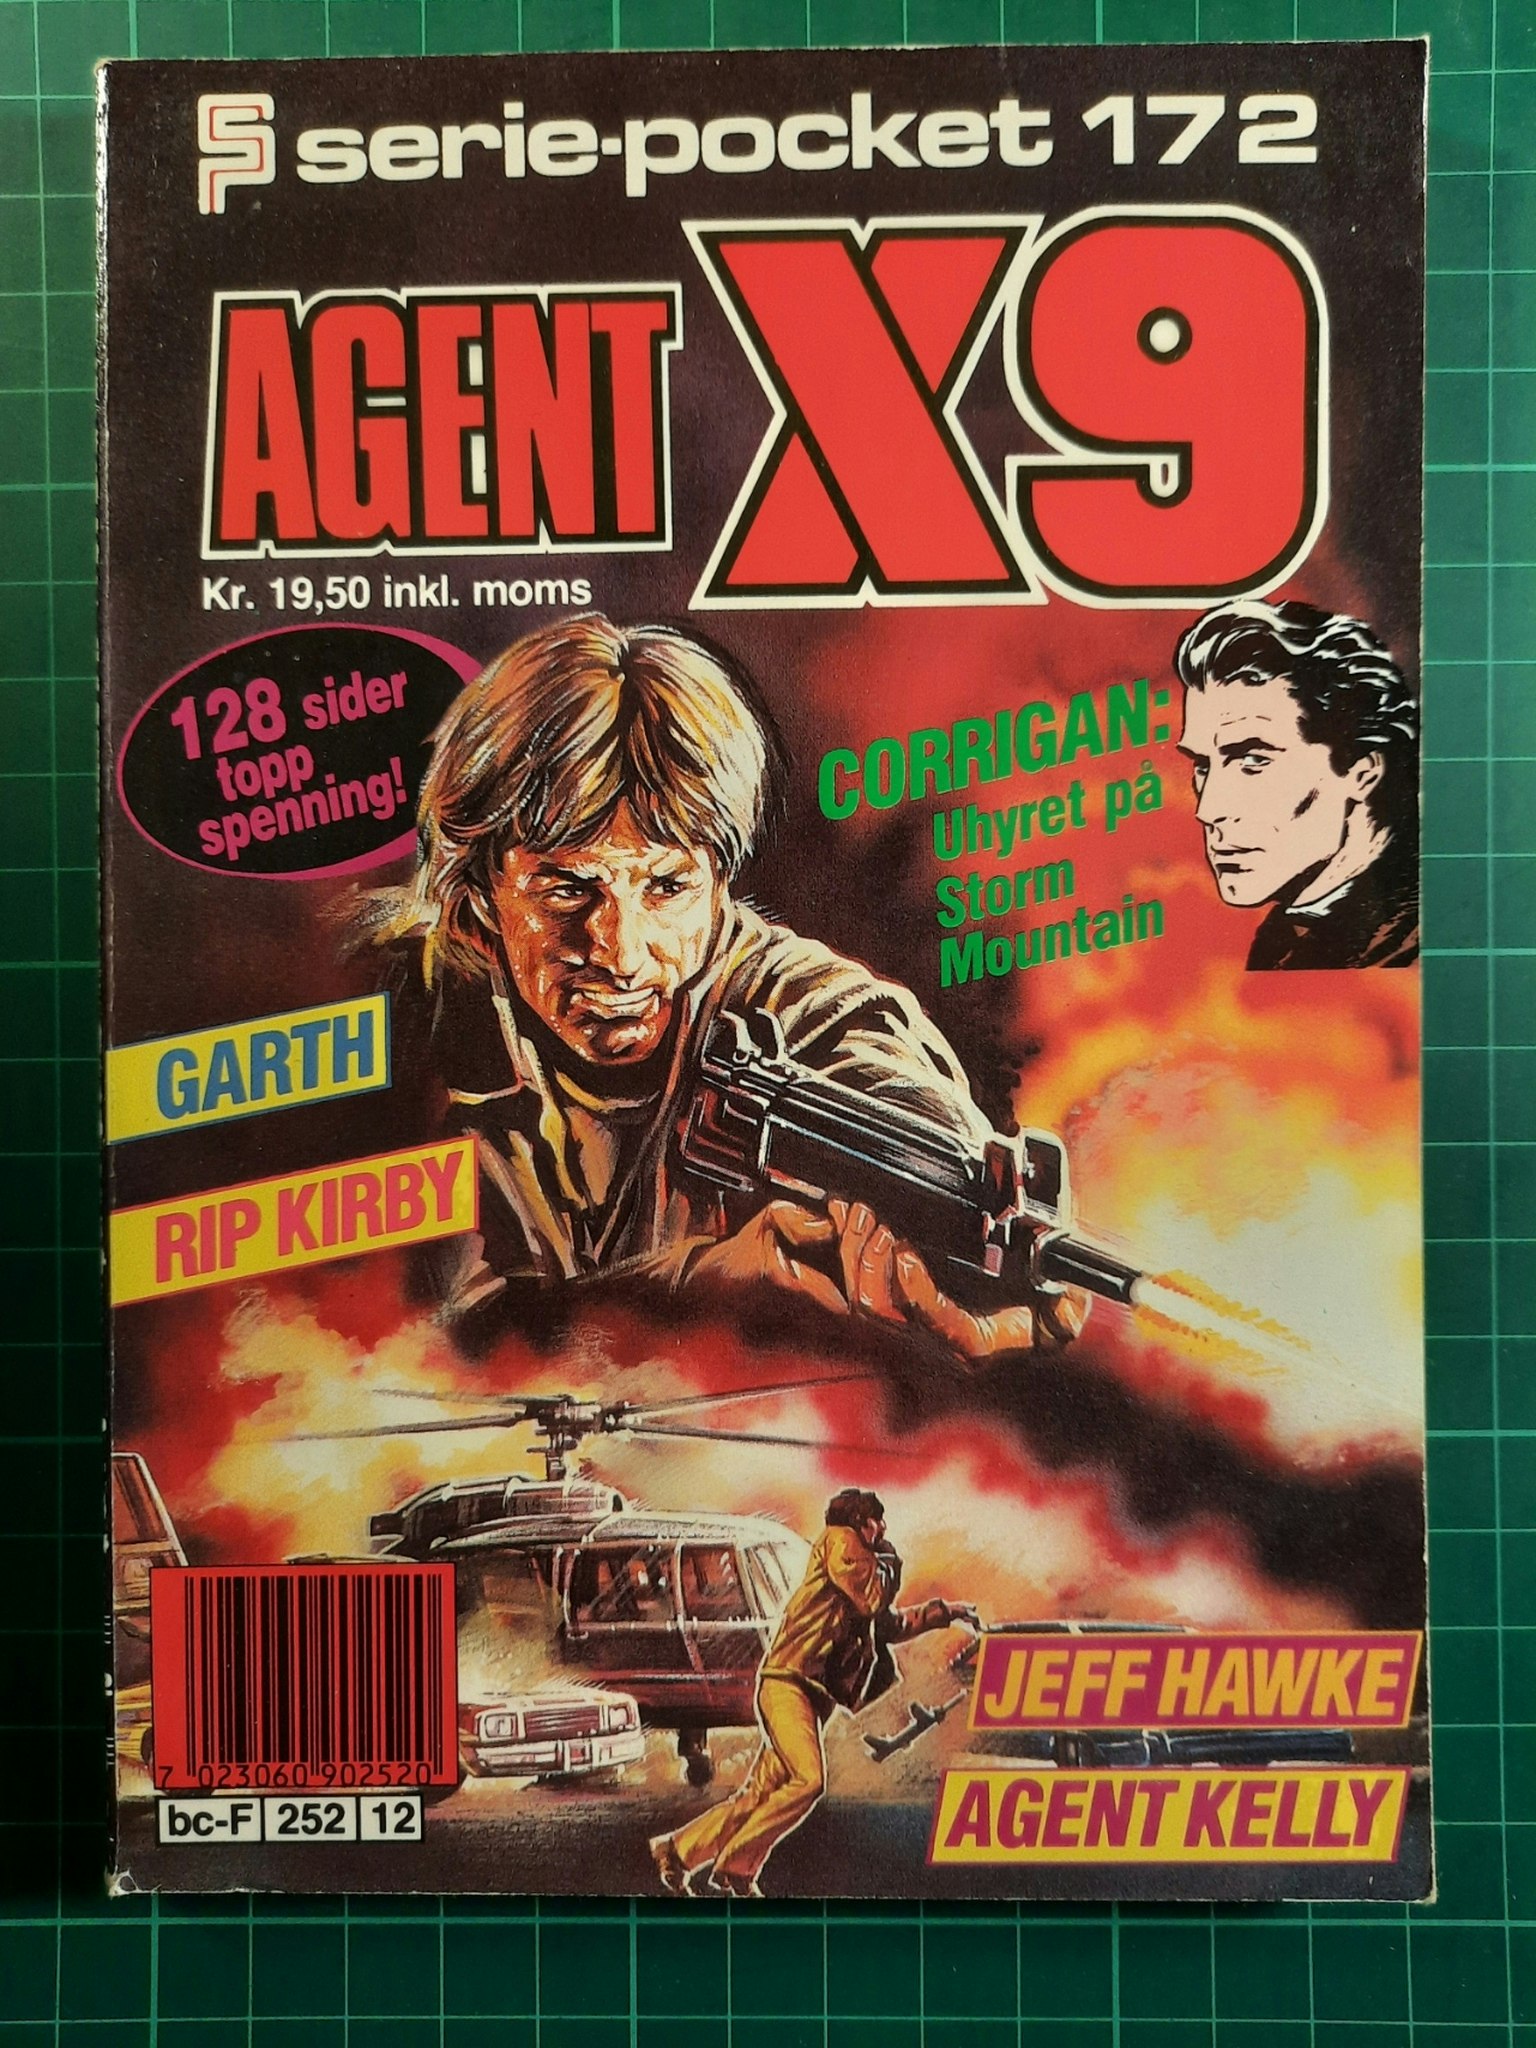 Serie-pocket 172 : Agent X9